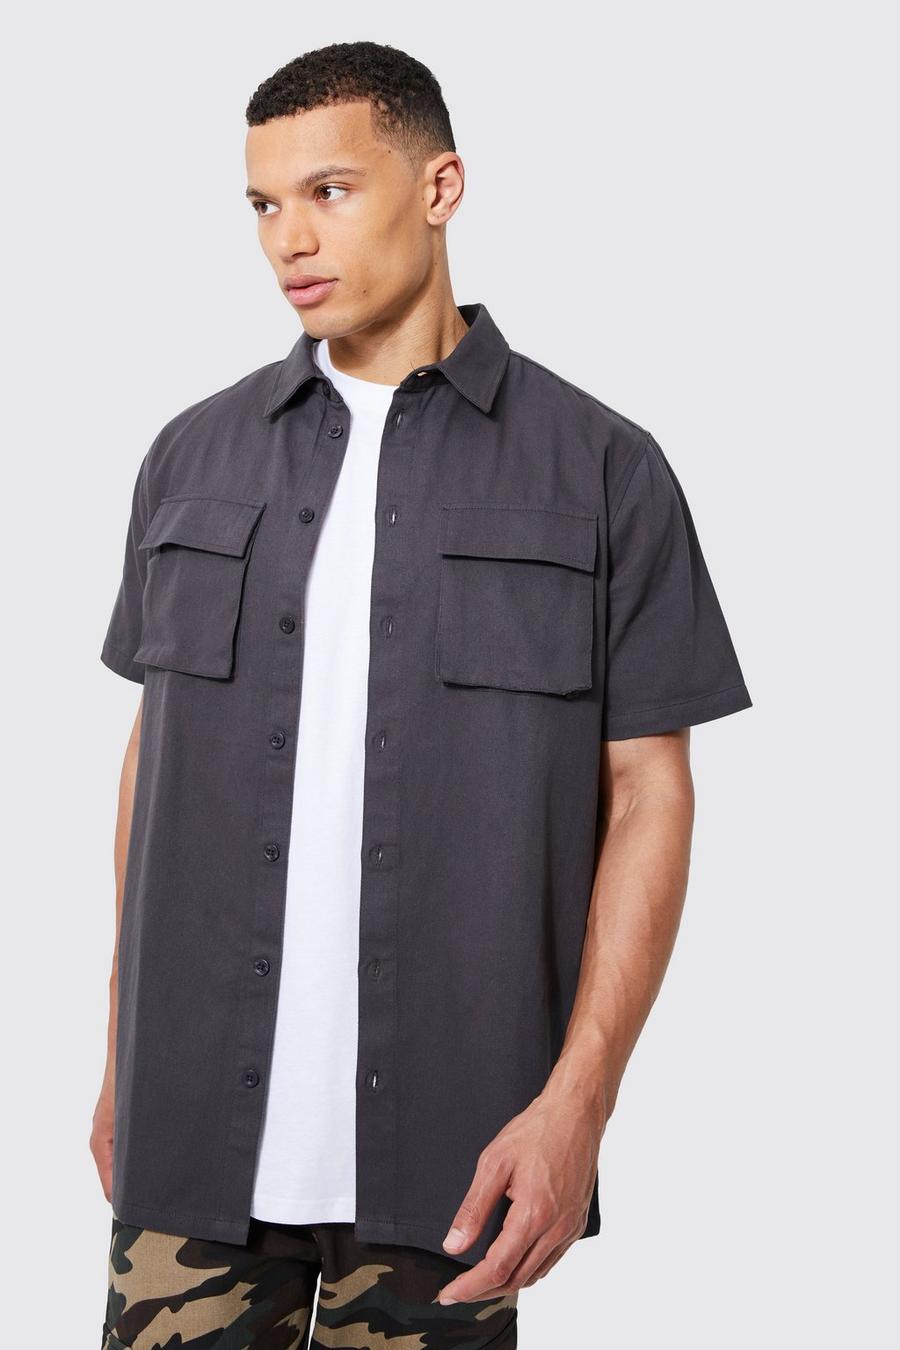 Charcoal Tall Short Sleeve Overshirt Utility Shirt